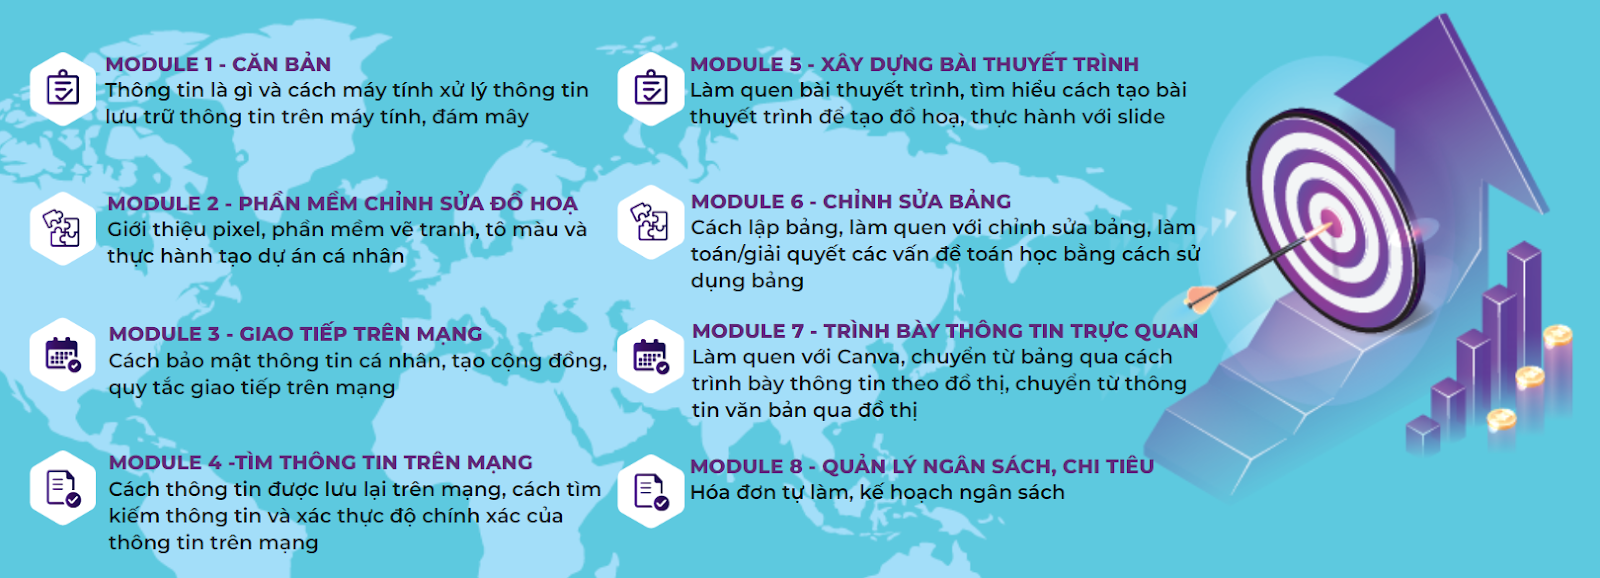 lo-trinh-hoc-lap-trinh-tu-co-ban-den-nang-cao-tai-algorithmics-digital-literacy-module